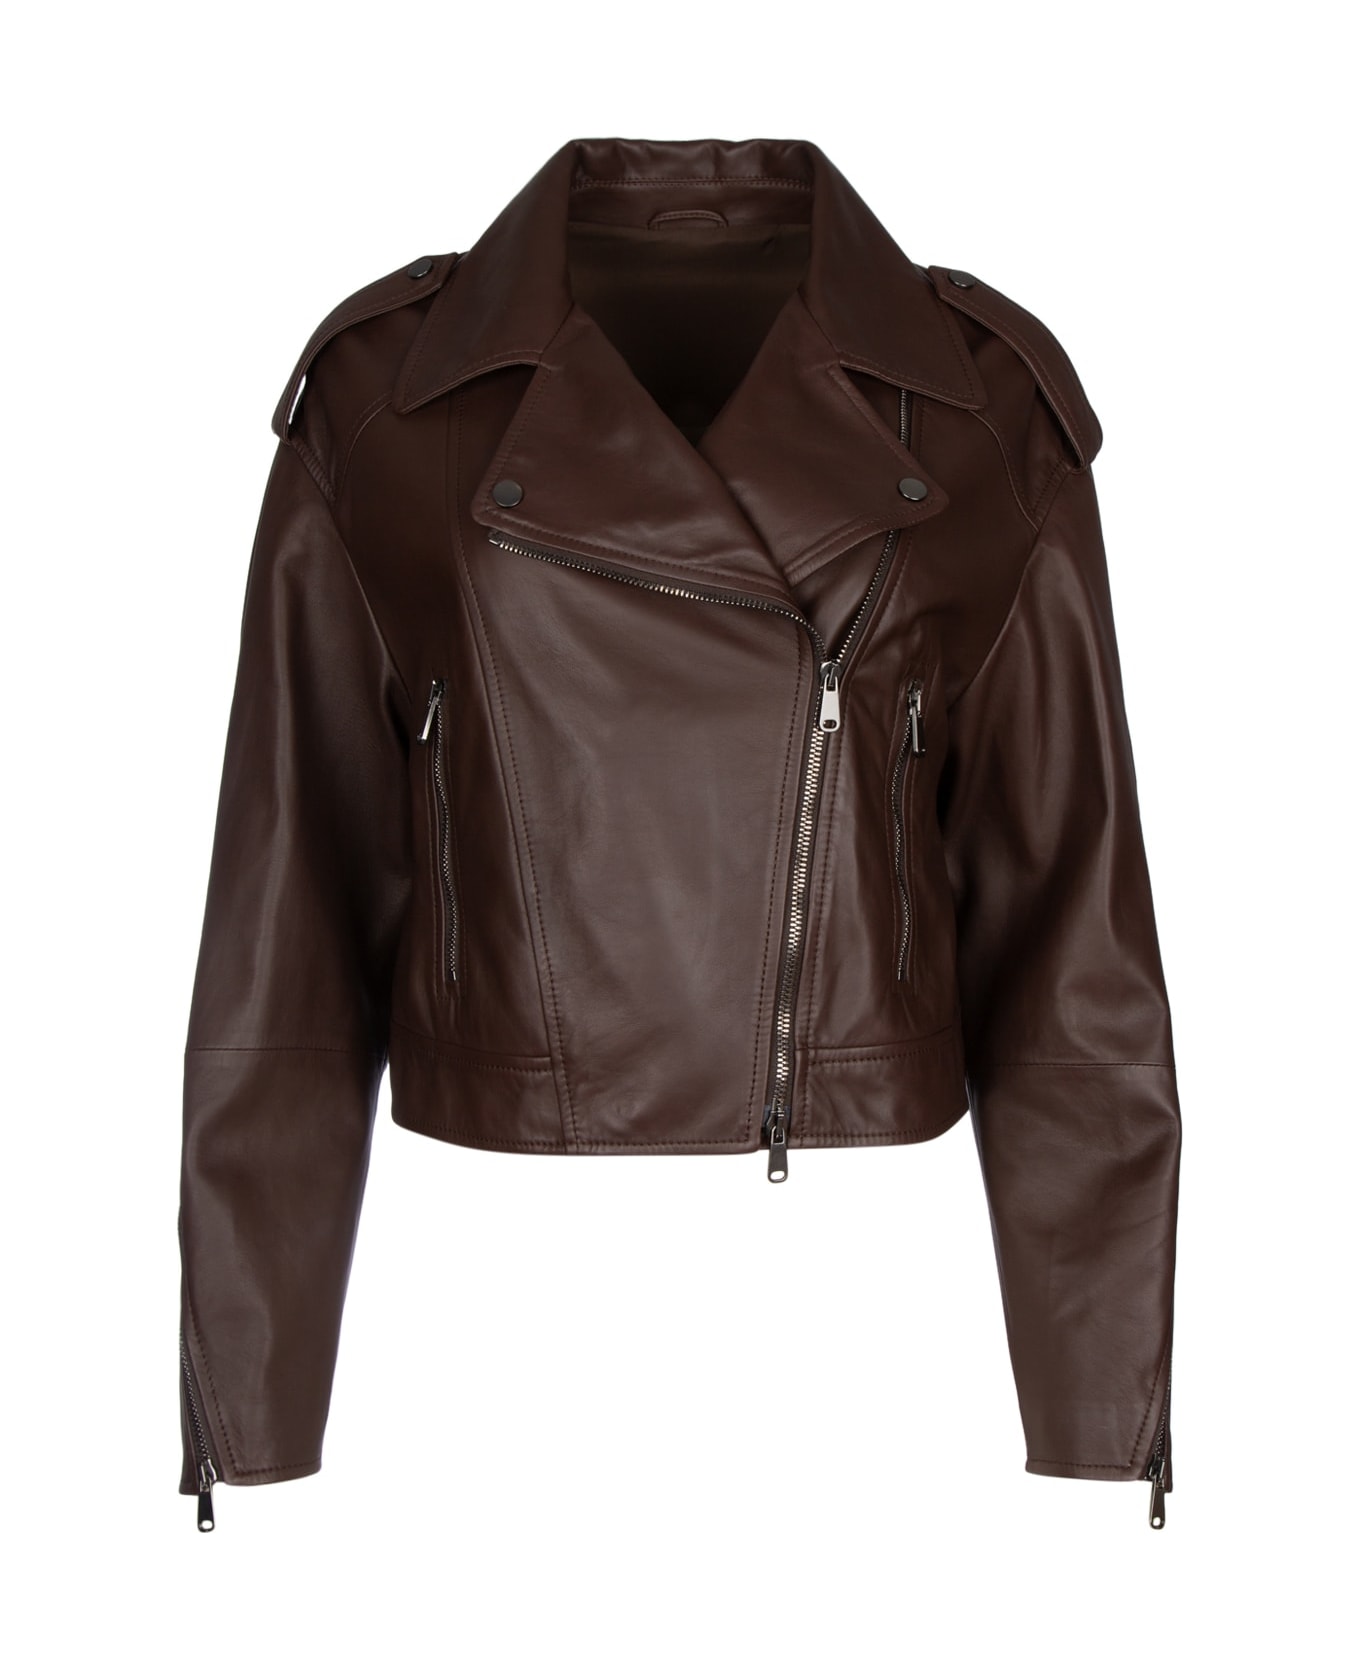 Brunello Cucinelli Leather Jacket - TESTADIMORO レザージャケット